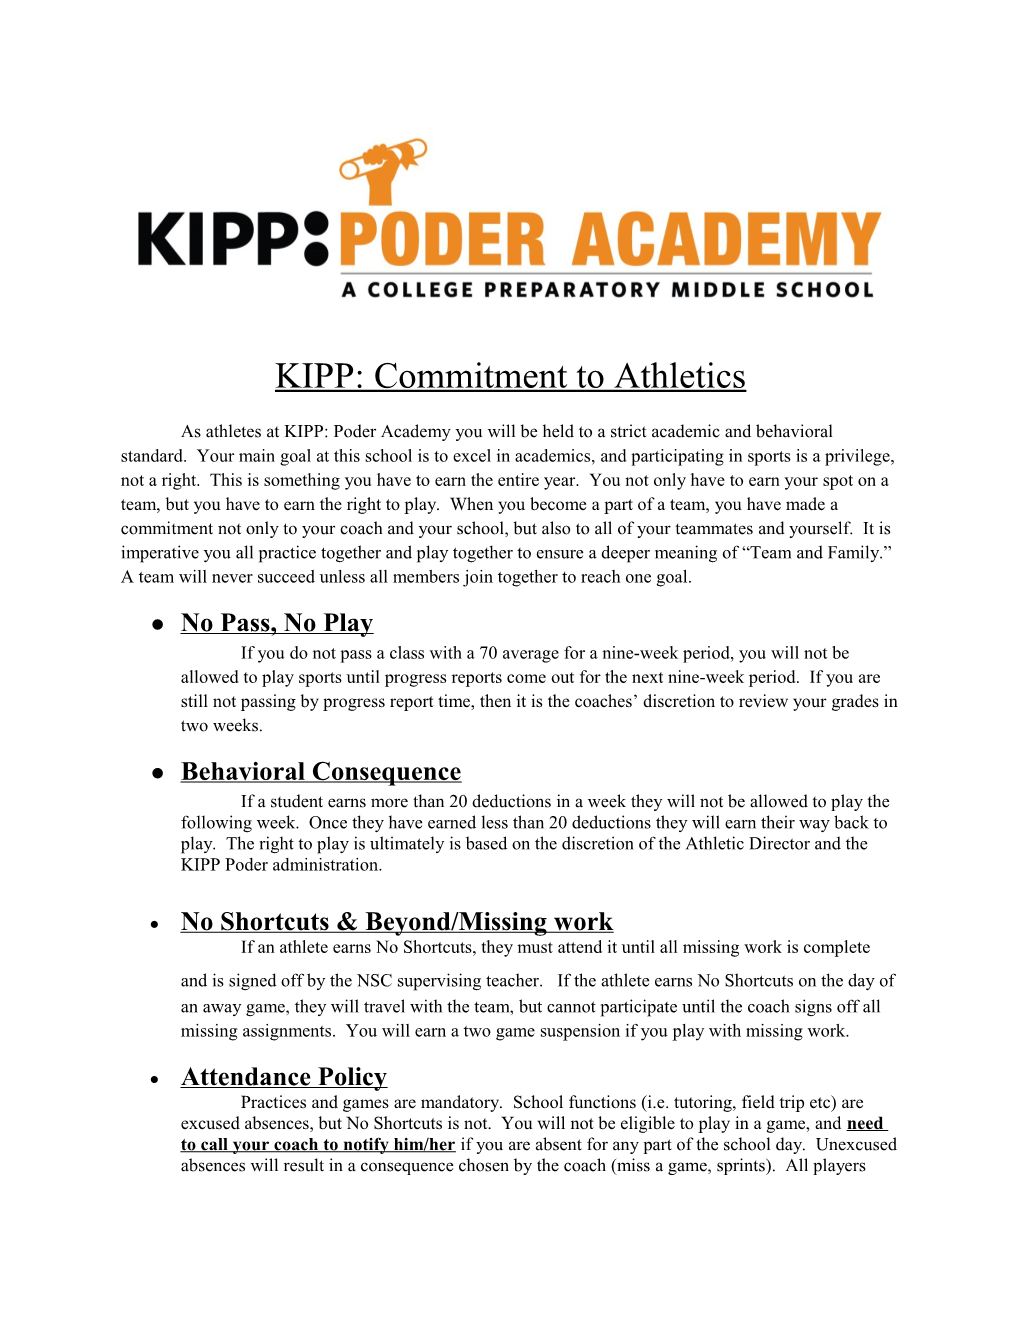 KIPP: Commitment to Athletics